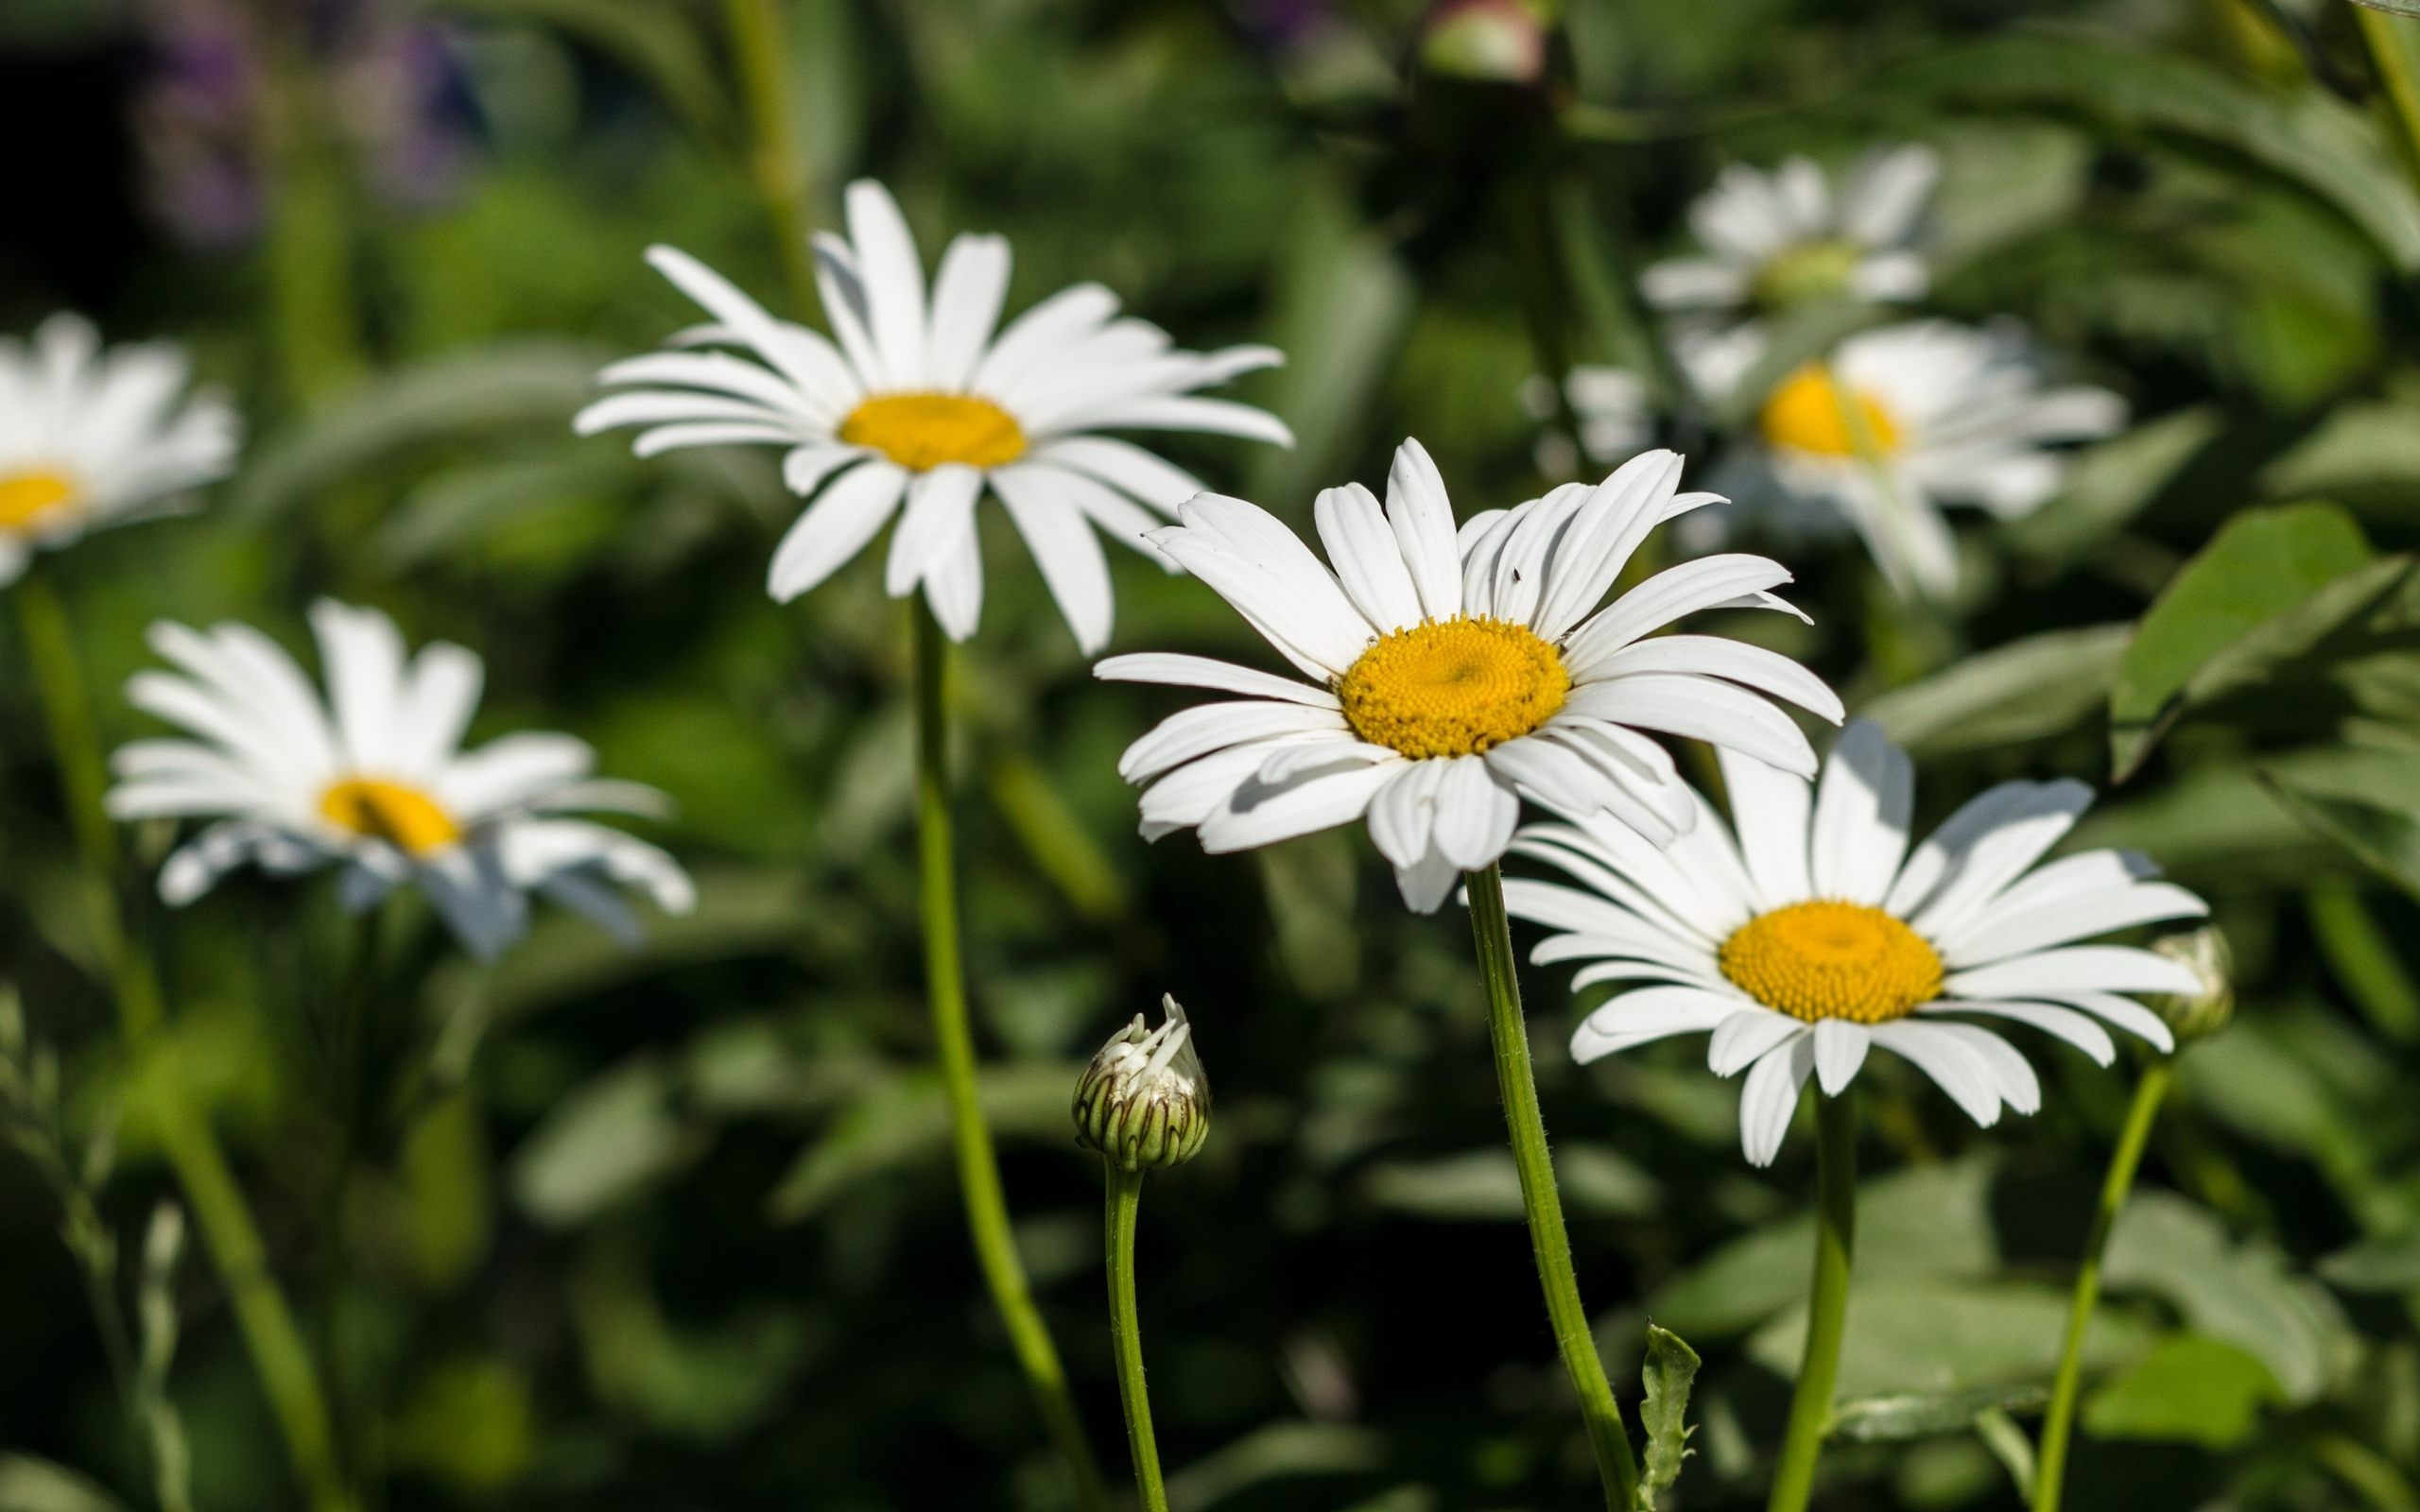 White daisy flowers photo